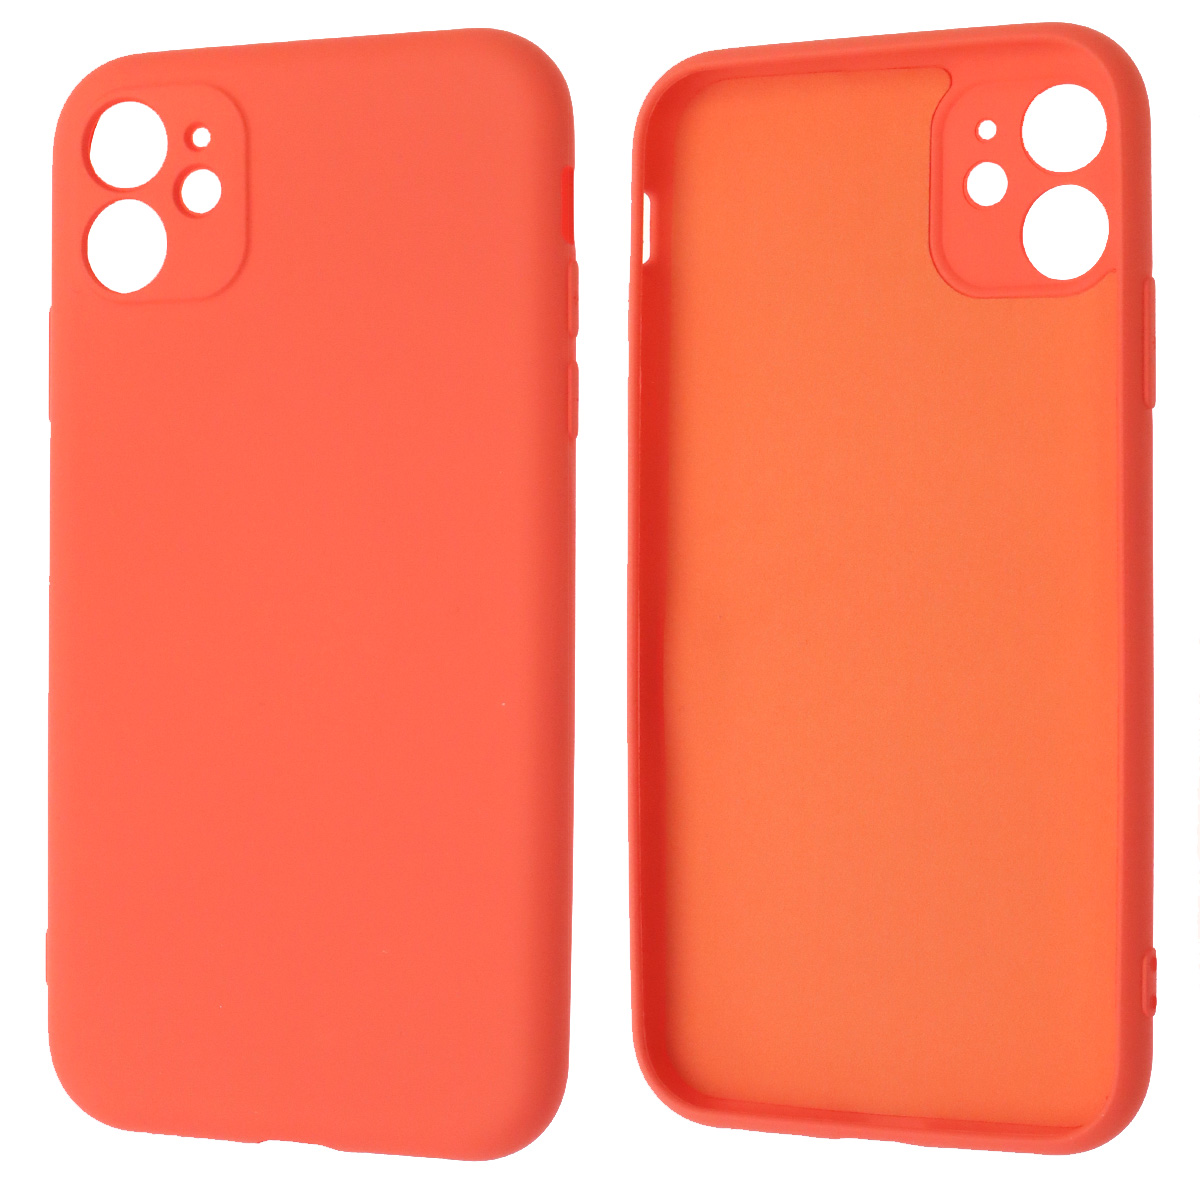 Чехол накладка NANO для APPLE iPhone 11, силикон, бархат, цвет коралловый